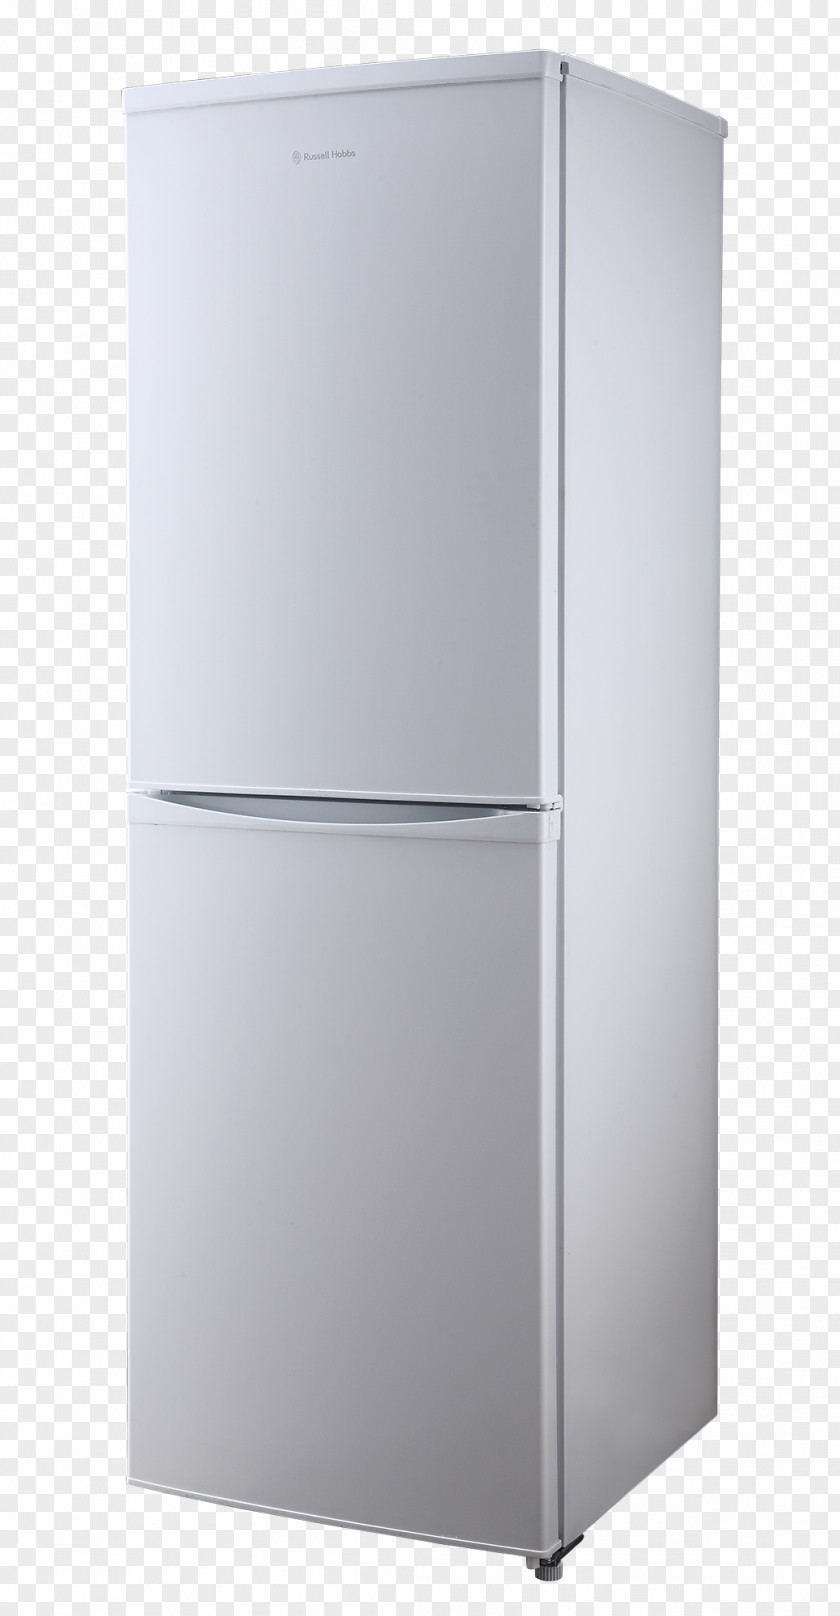 Refrigerator Auto-defrost Russell Hobbs Freezers Larder PNG